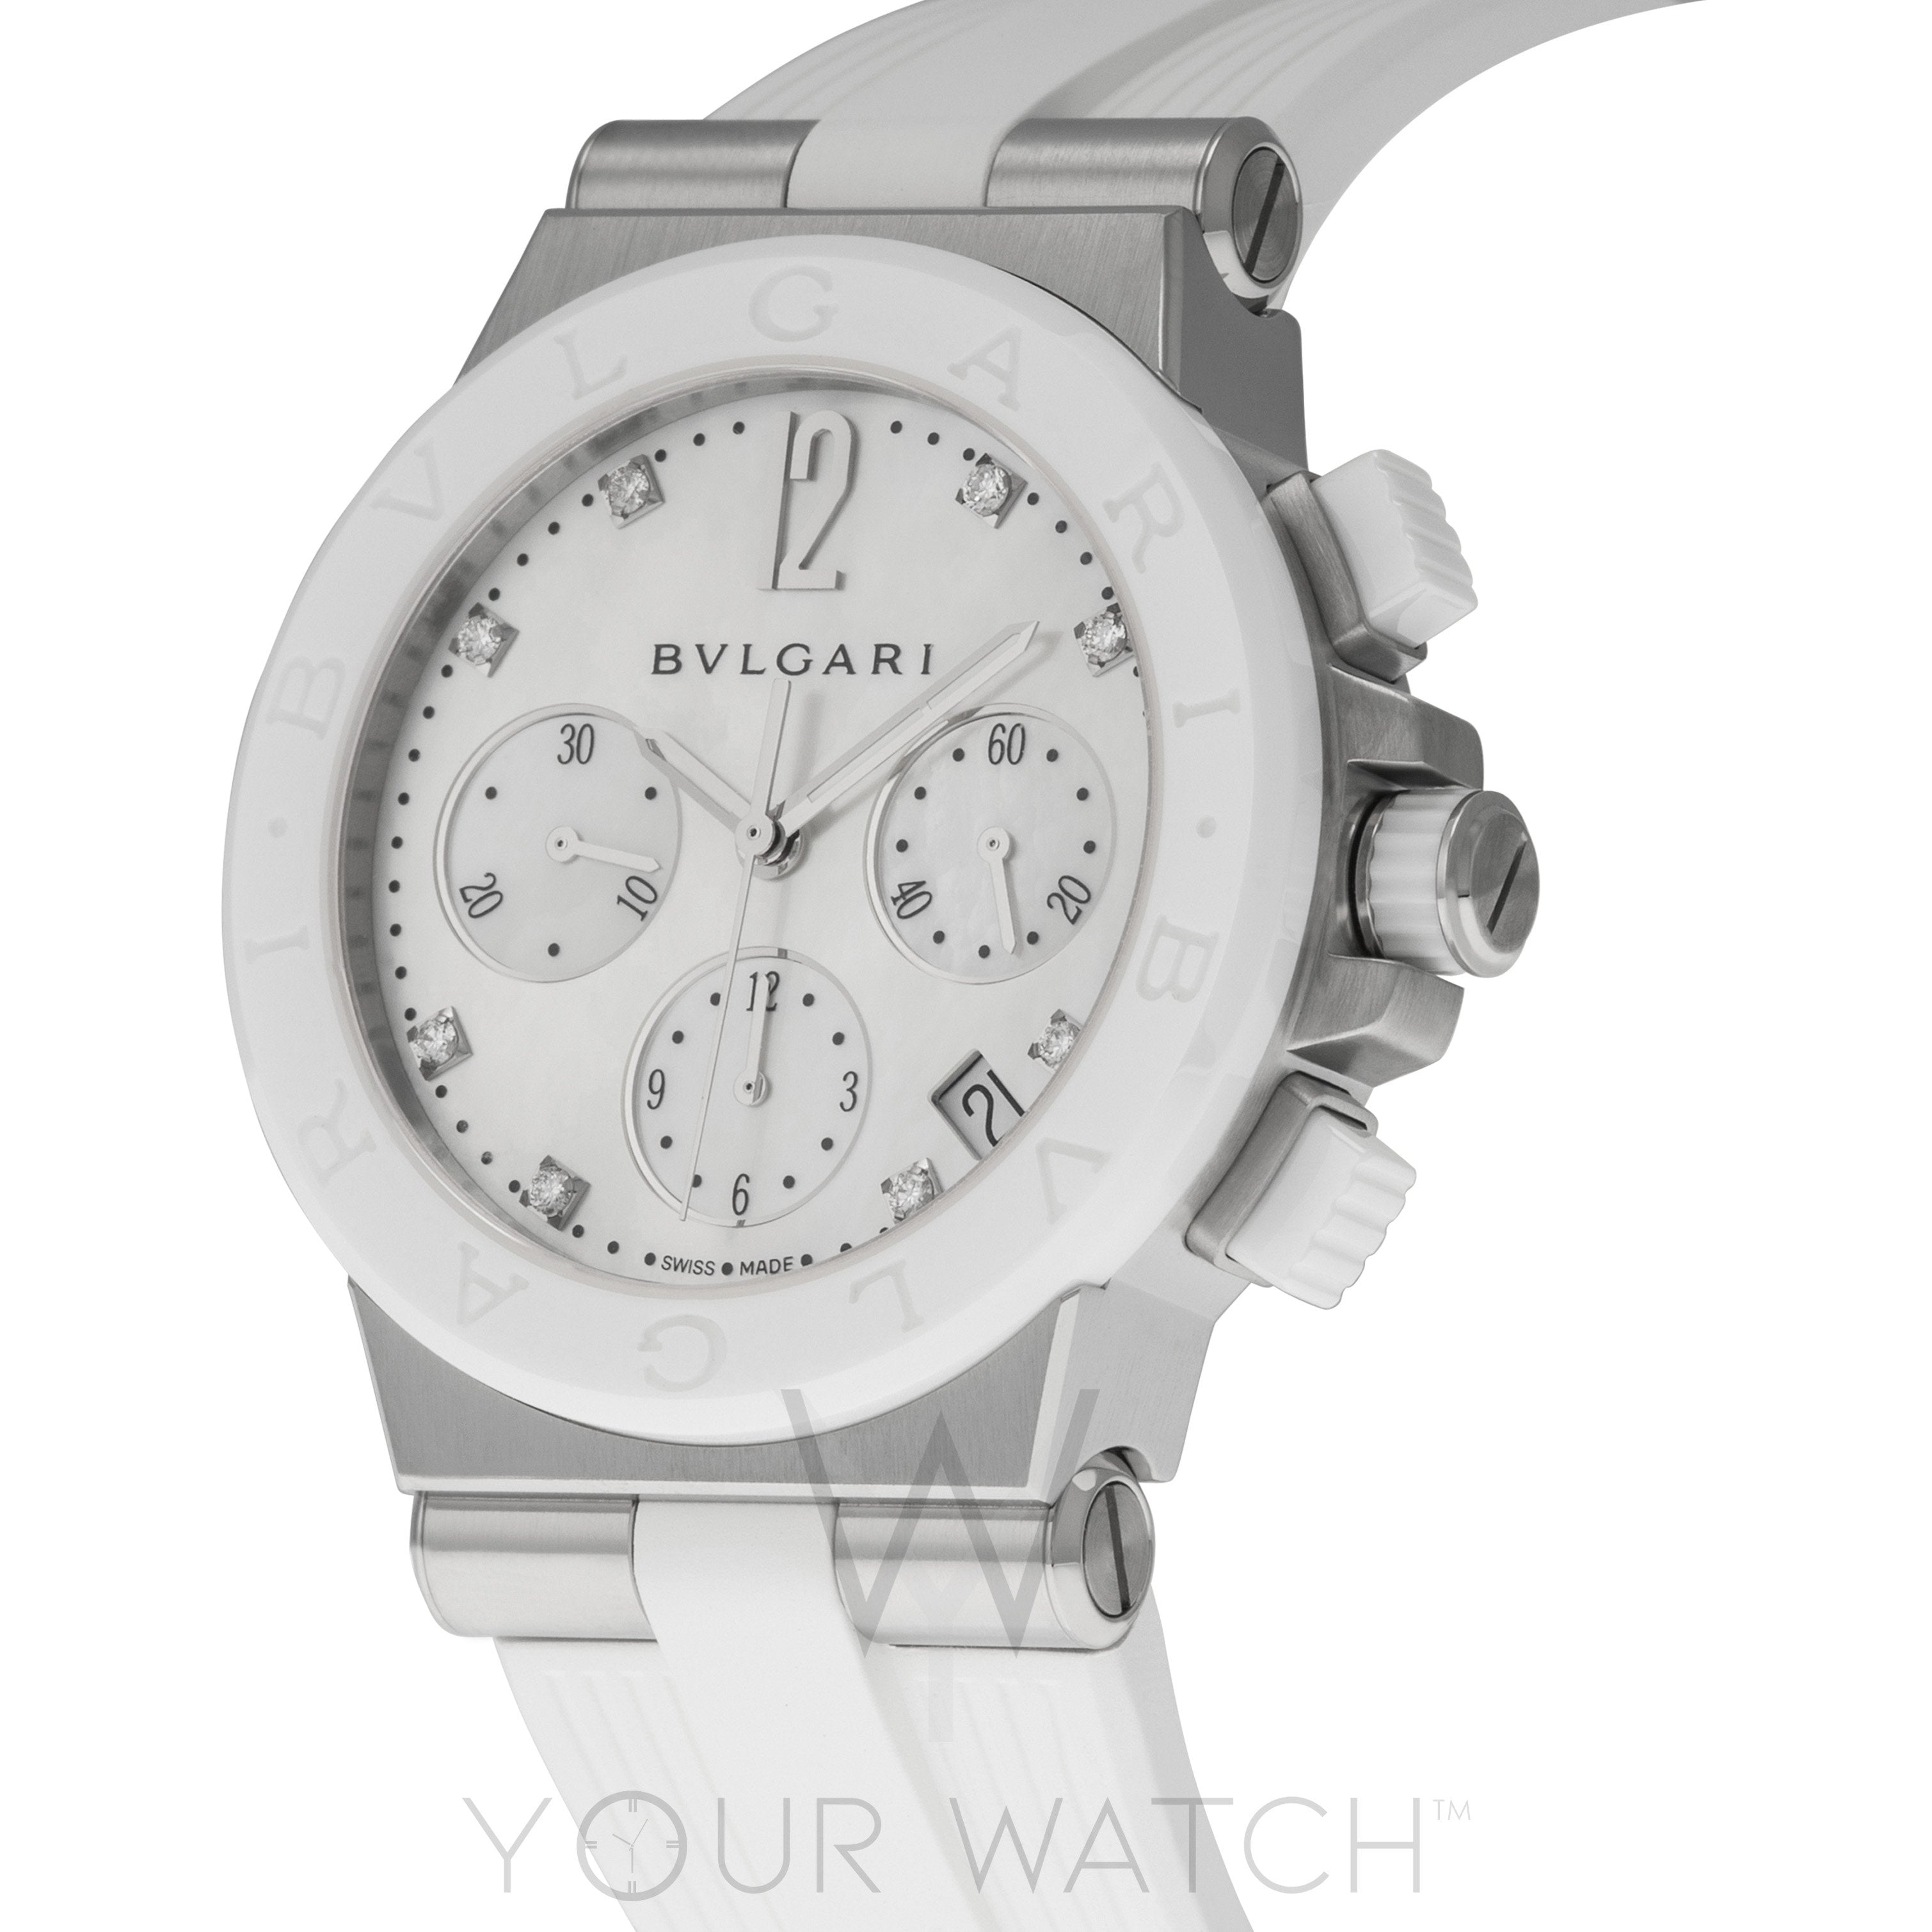 Bvlgari Diagono Chronograph Watch 101993 - Your Watch LLC